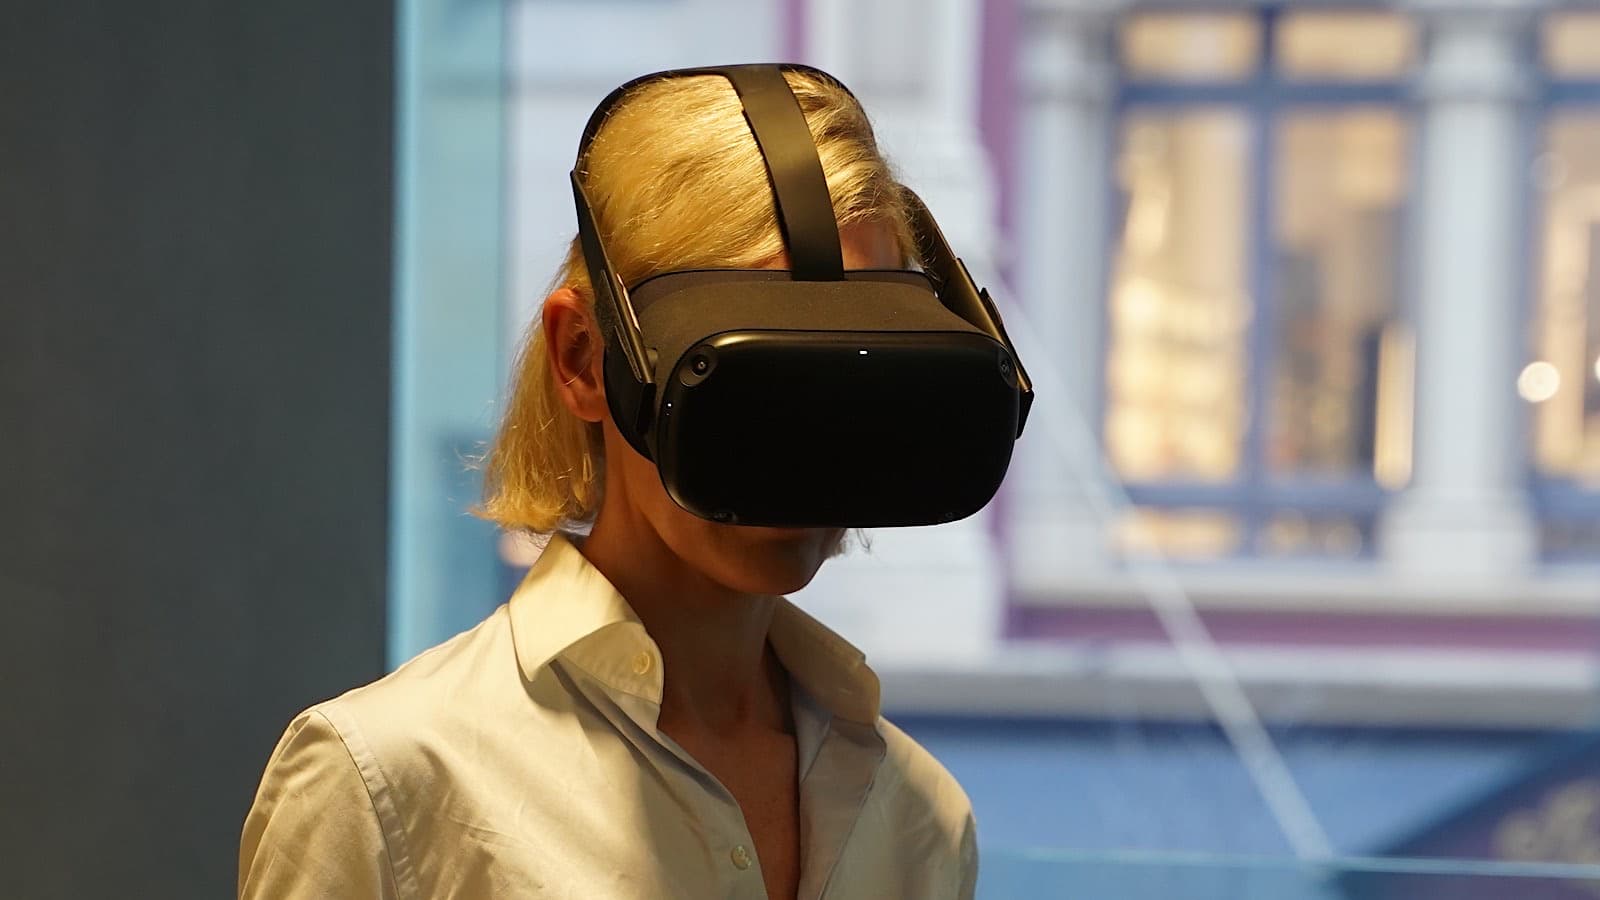 Optus 5G VR test in Sydney